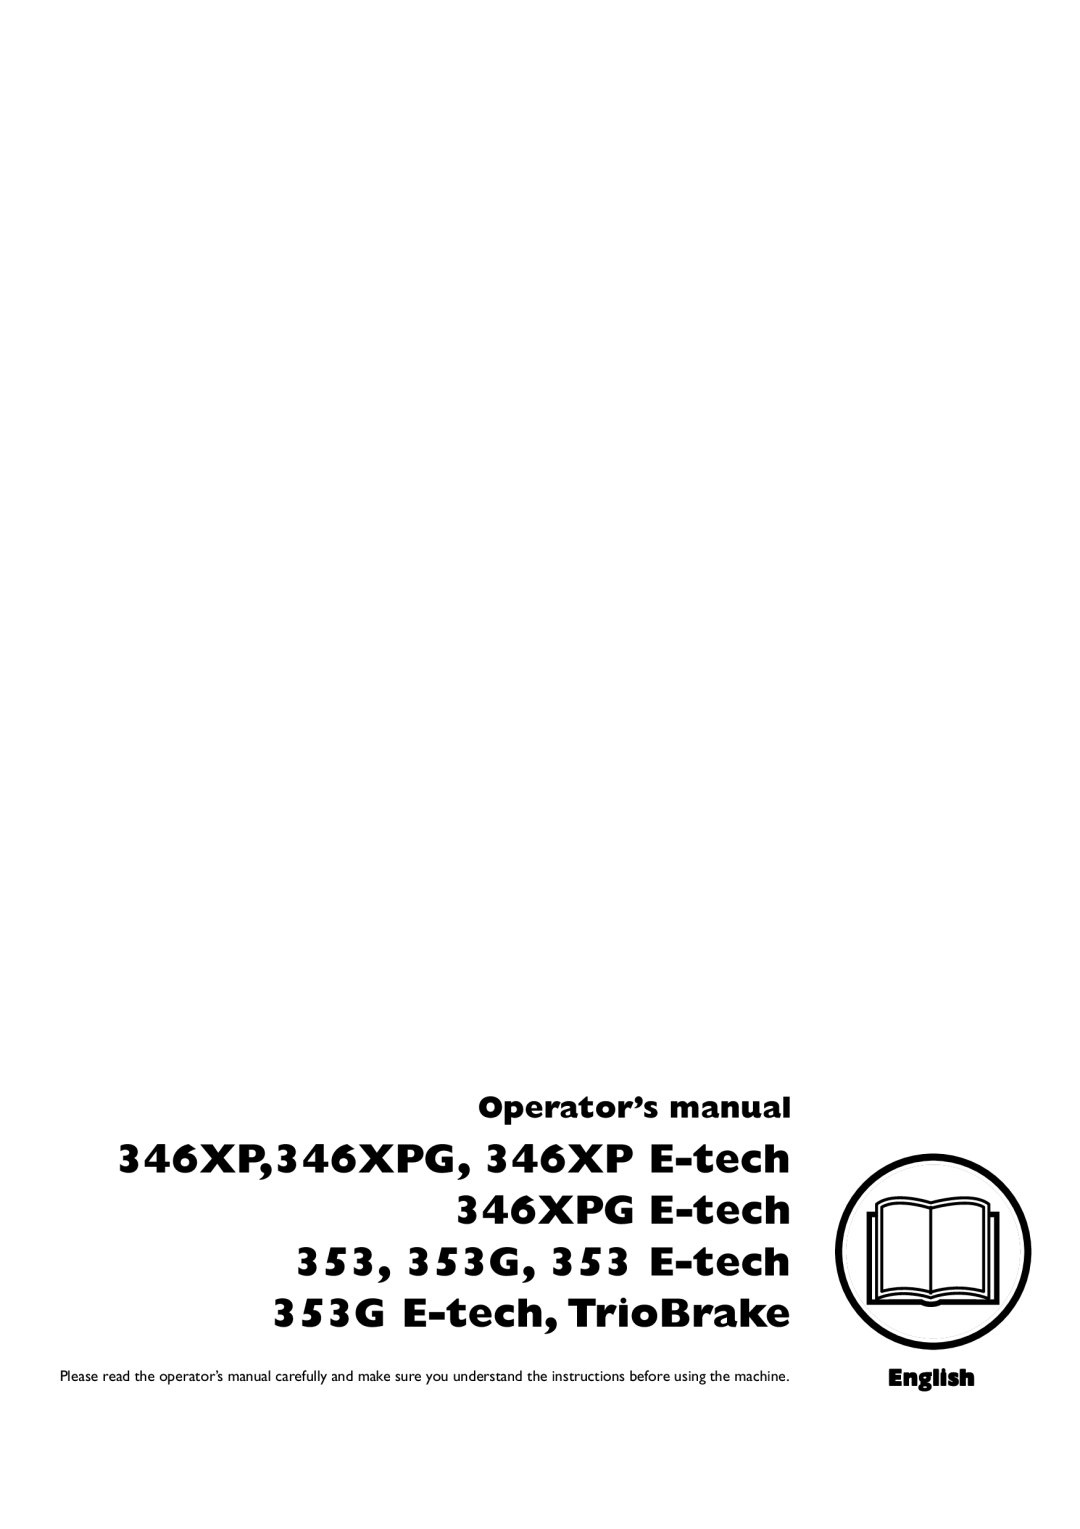 Husqvarna 353 E-tech, 346XPG E-tech, 346XP E-tech, 1153178-95 manual 353G E-tech,TrioBrake, Operator’s manual, English 